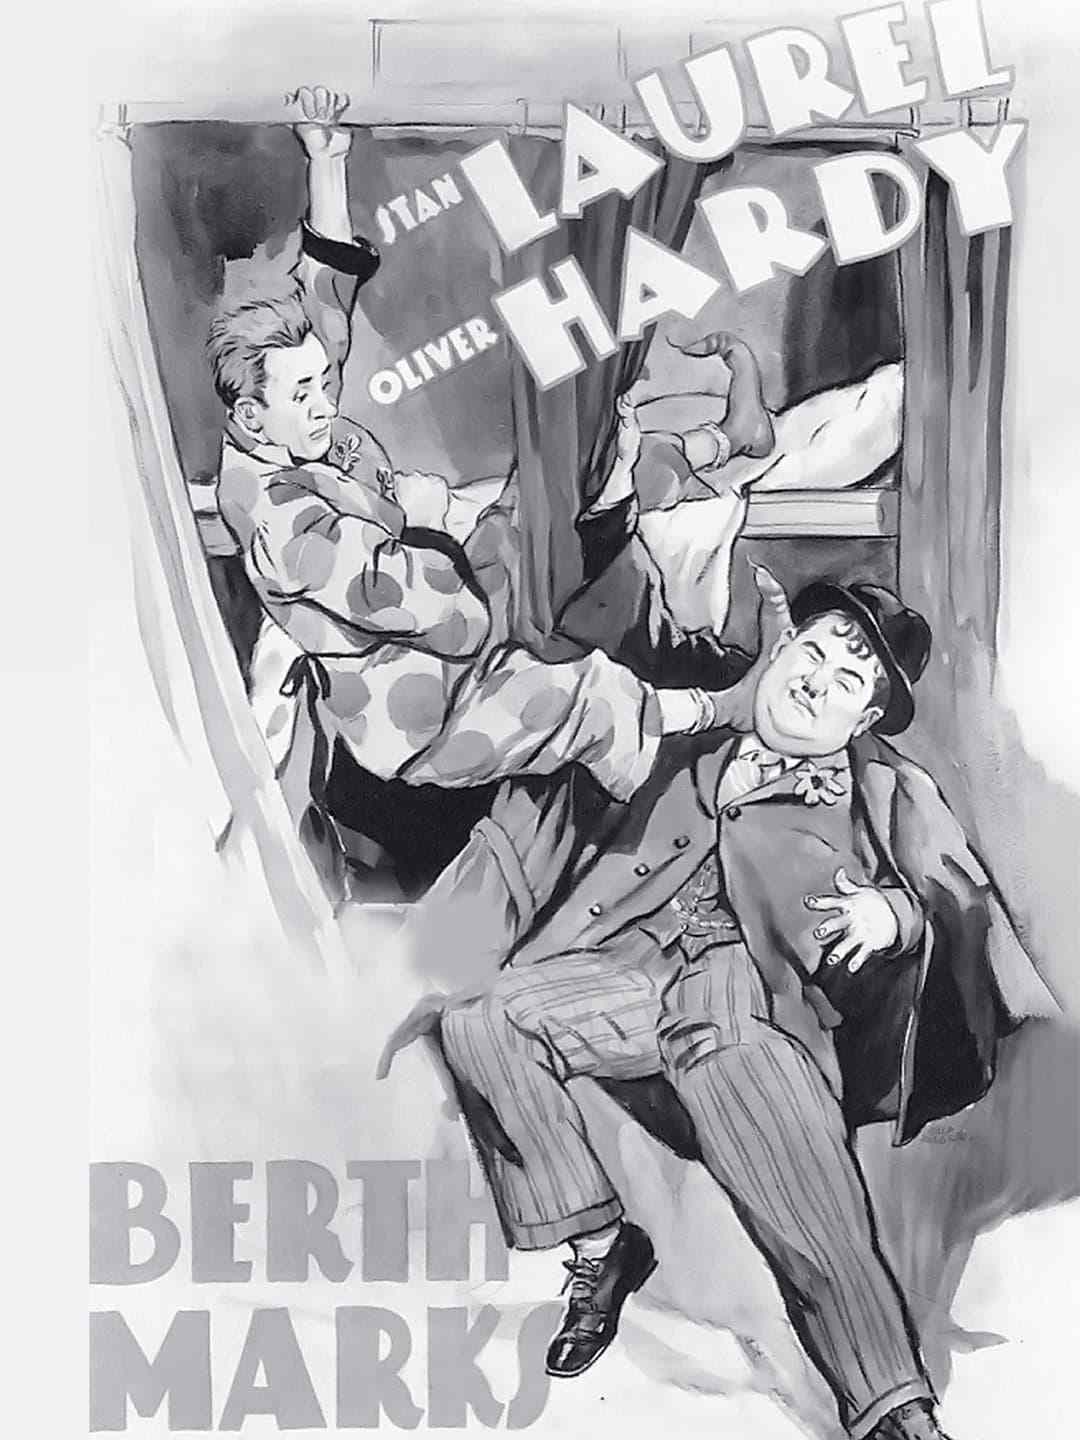 Laurel & Hardy - Berth Marks